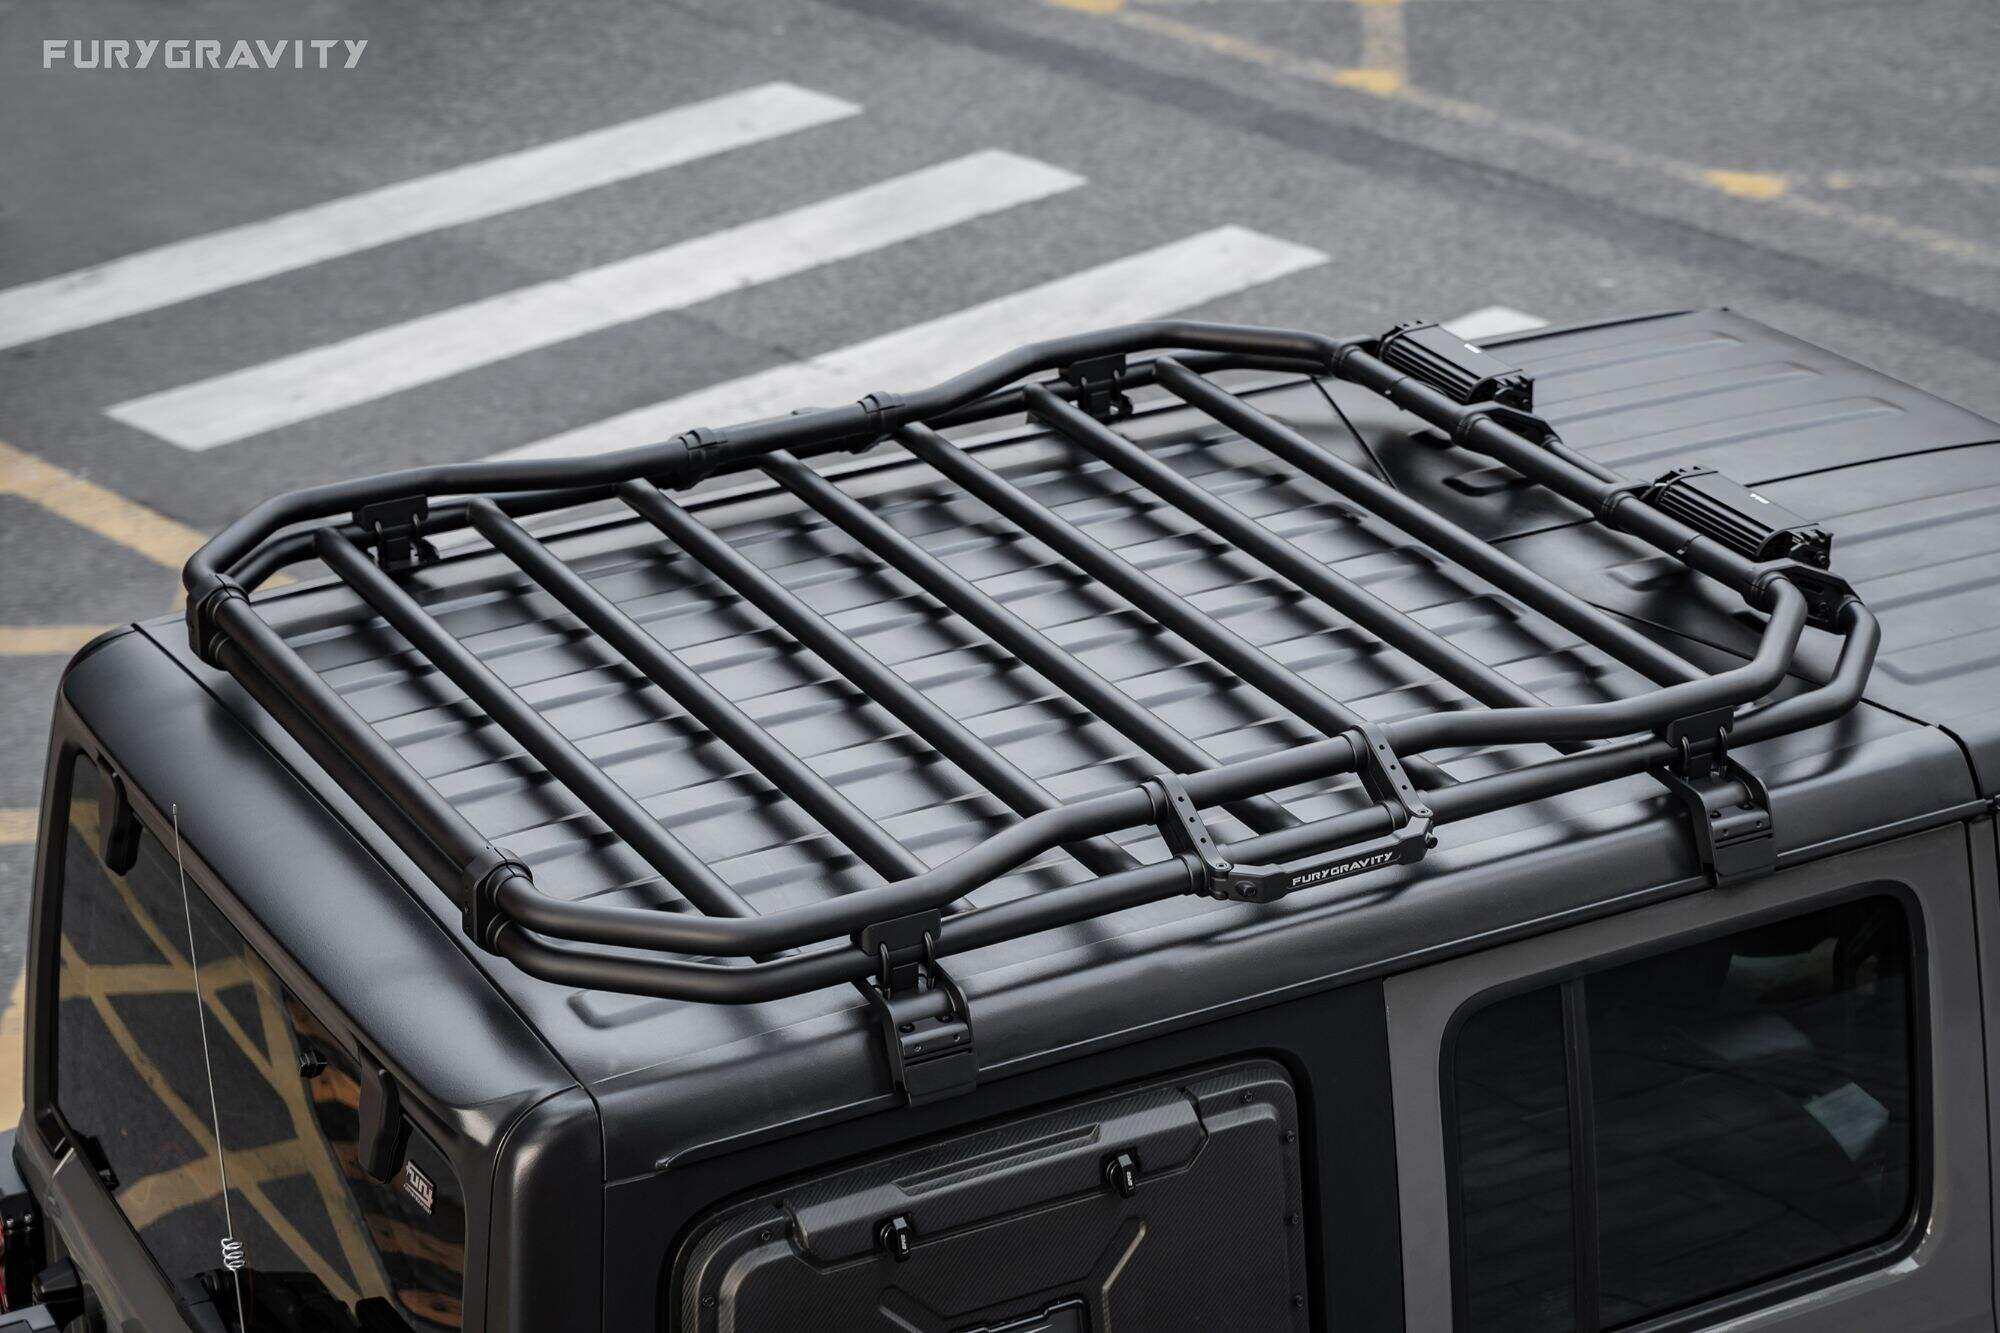 Багажник Fury на крышу для Jeep Wrangler